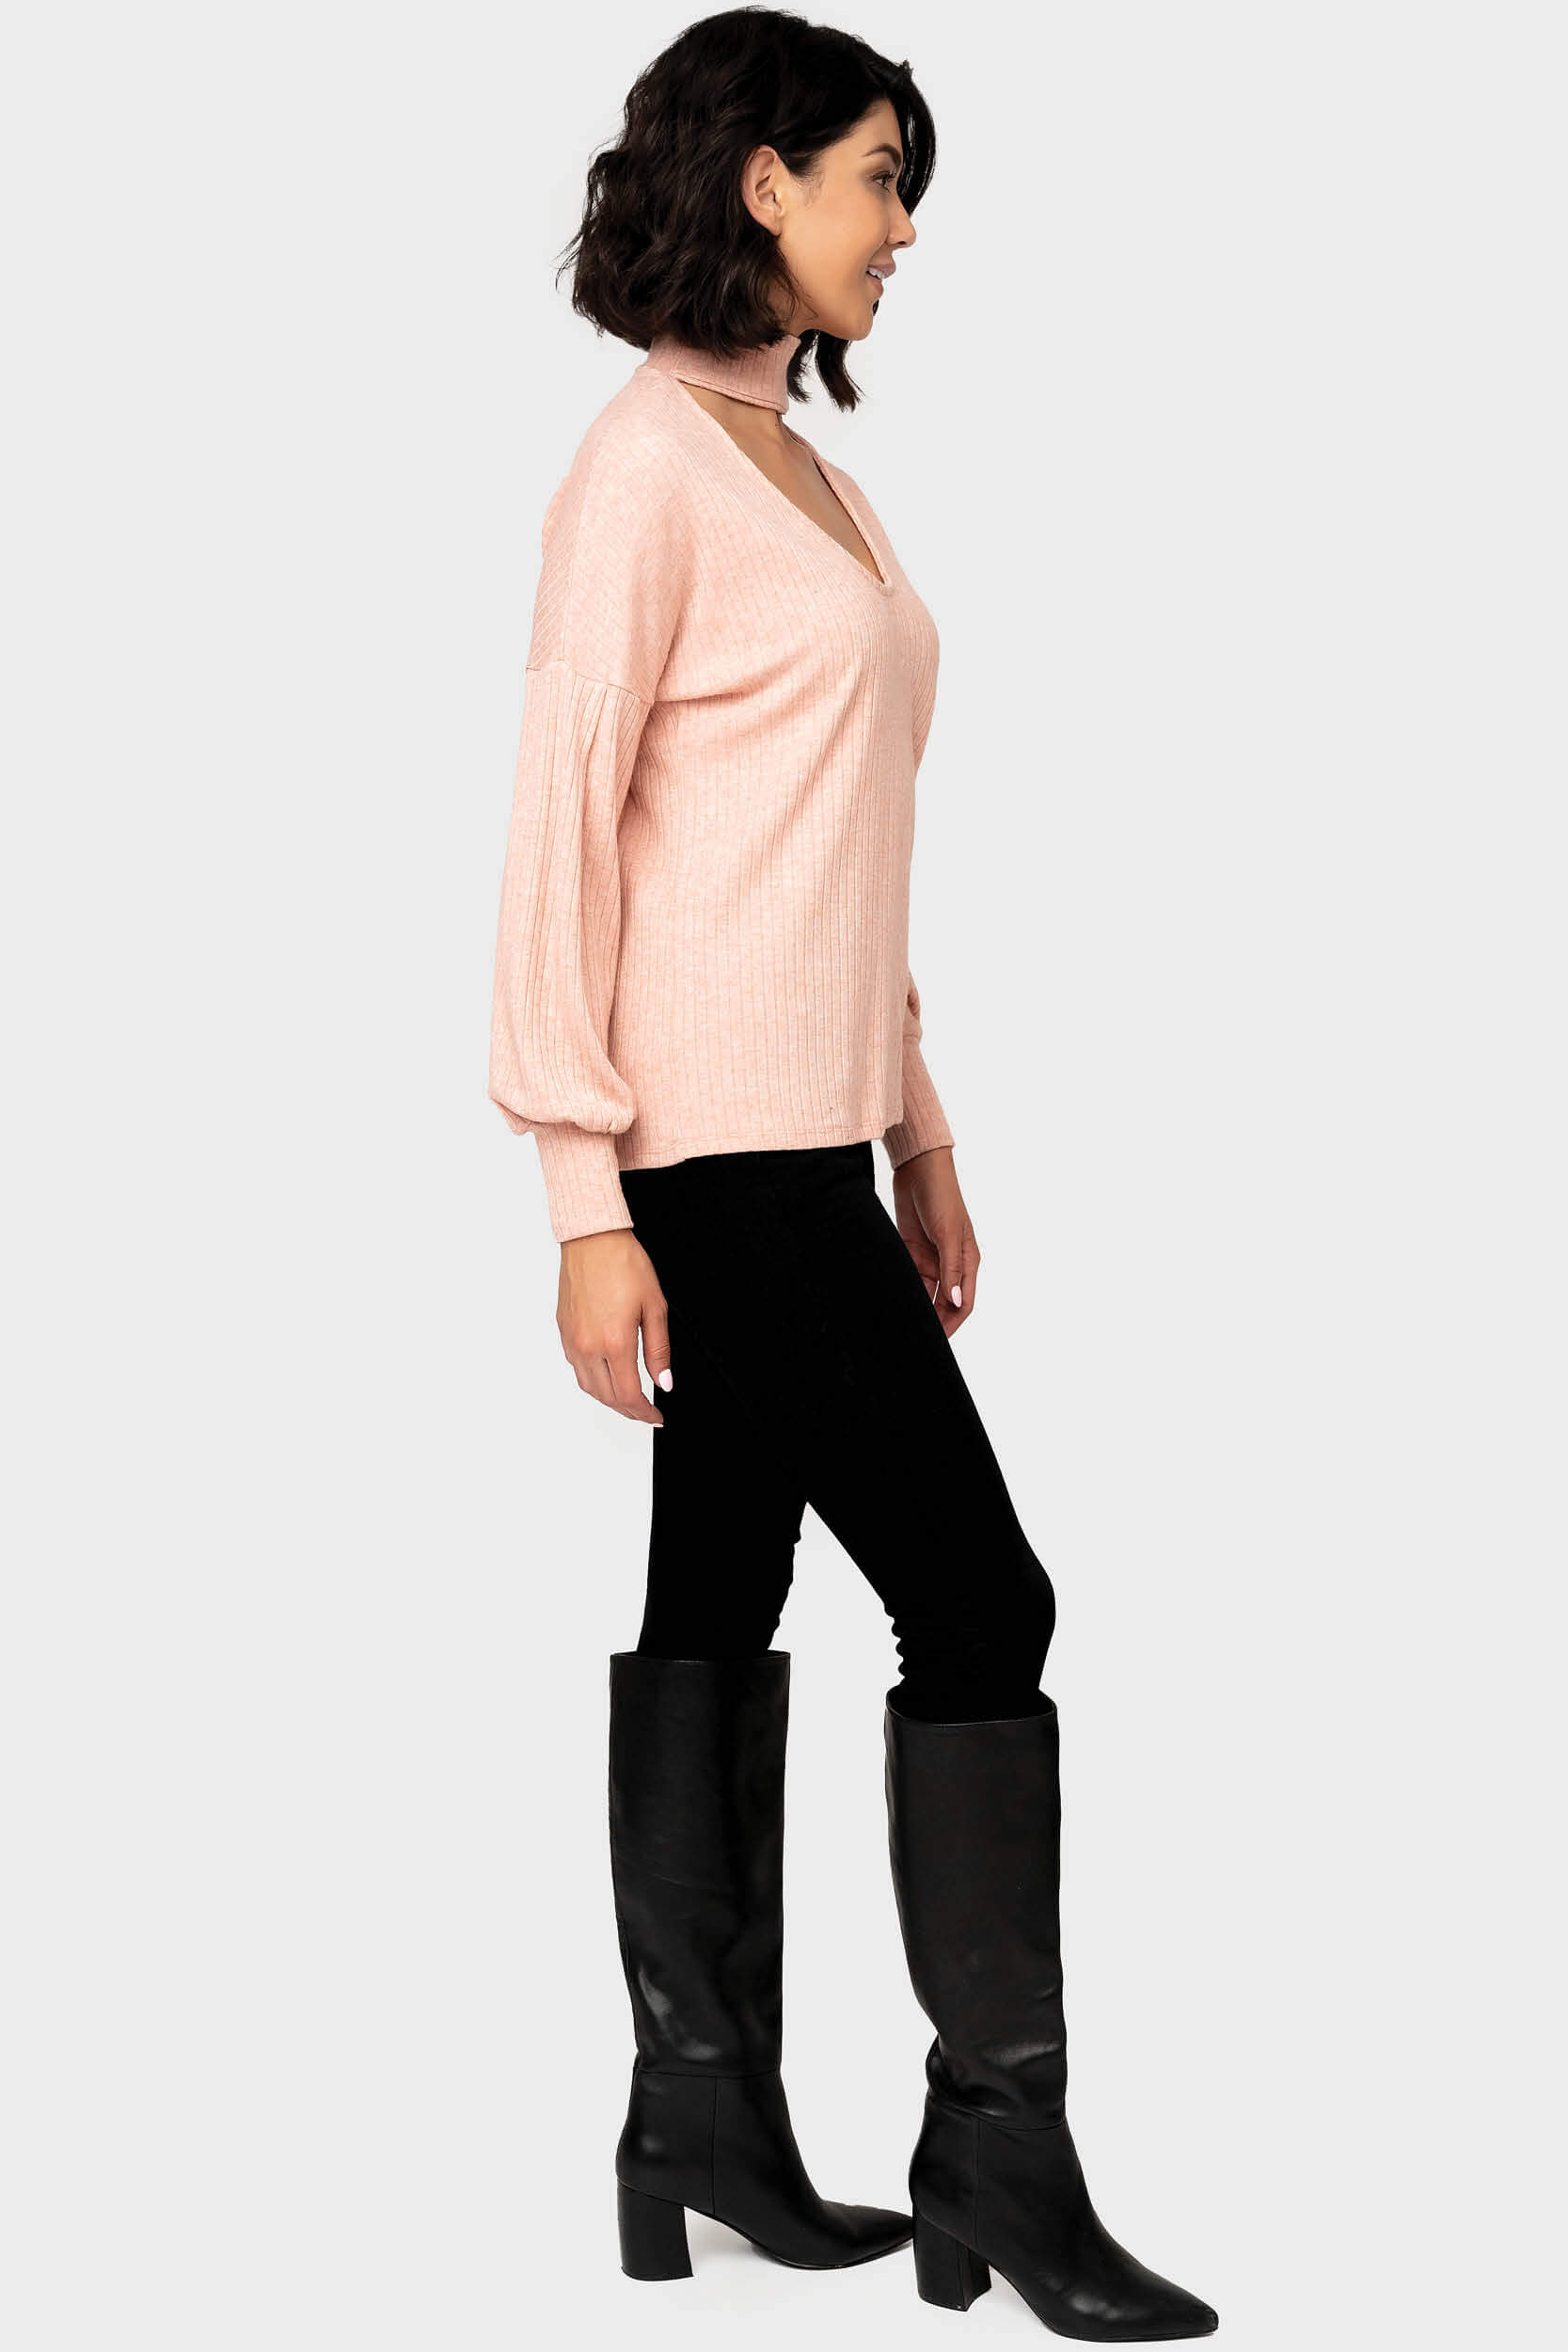 Heather Grey Women's Madalene V-Neck Cashmere Sweater Heather Grey –  Equipment